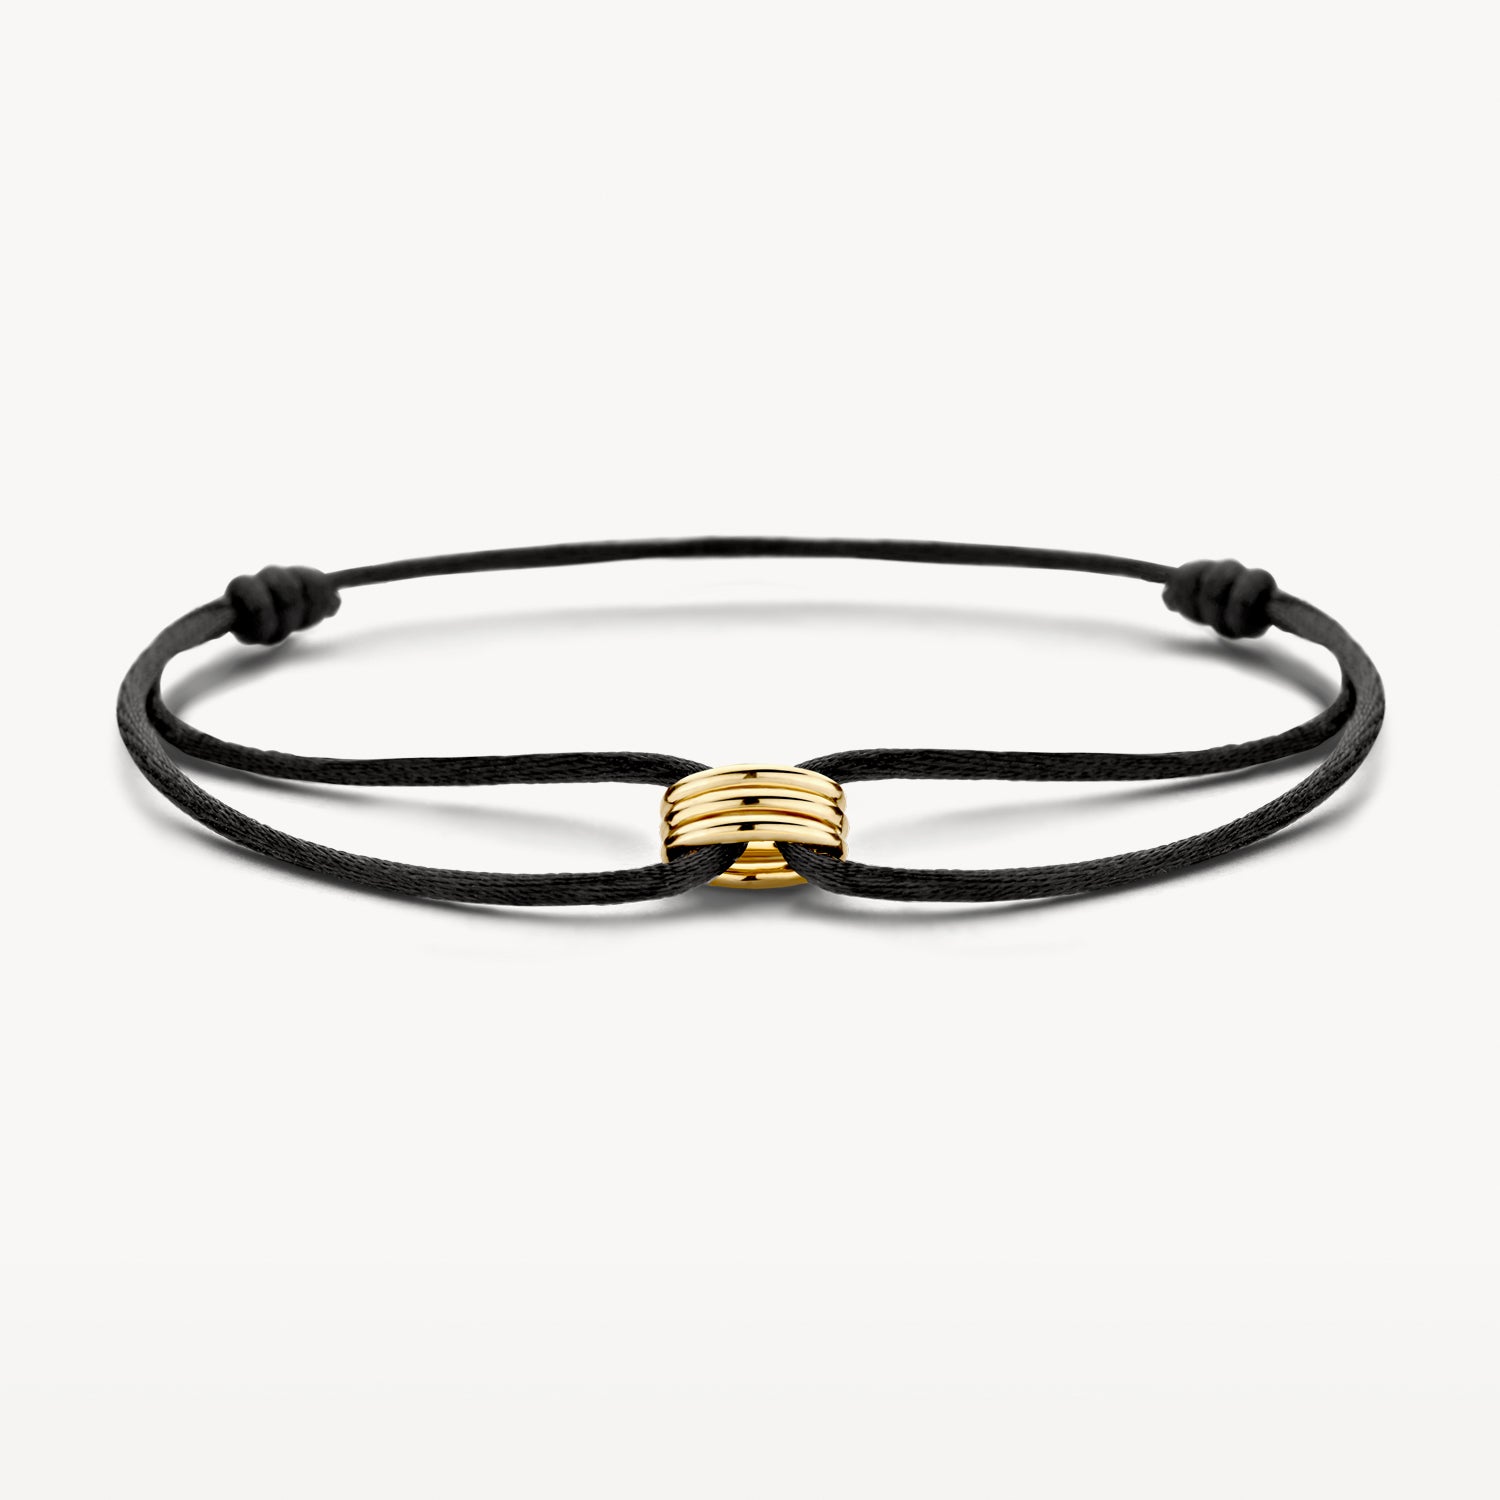 Bracelet 2173YGO - 14k Yellow Gold with silk cord